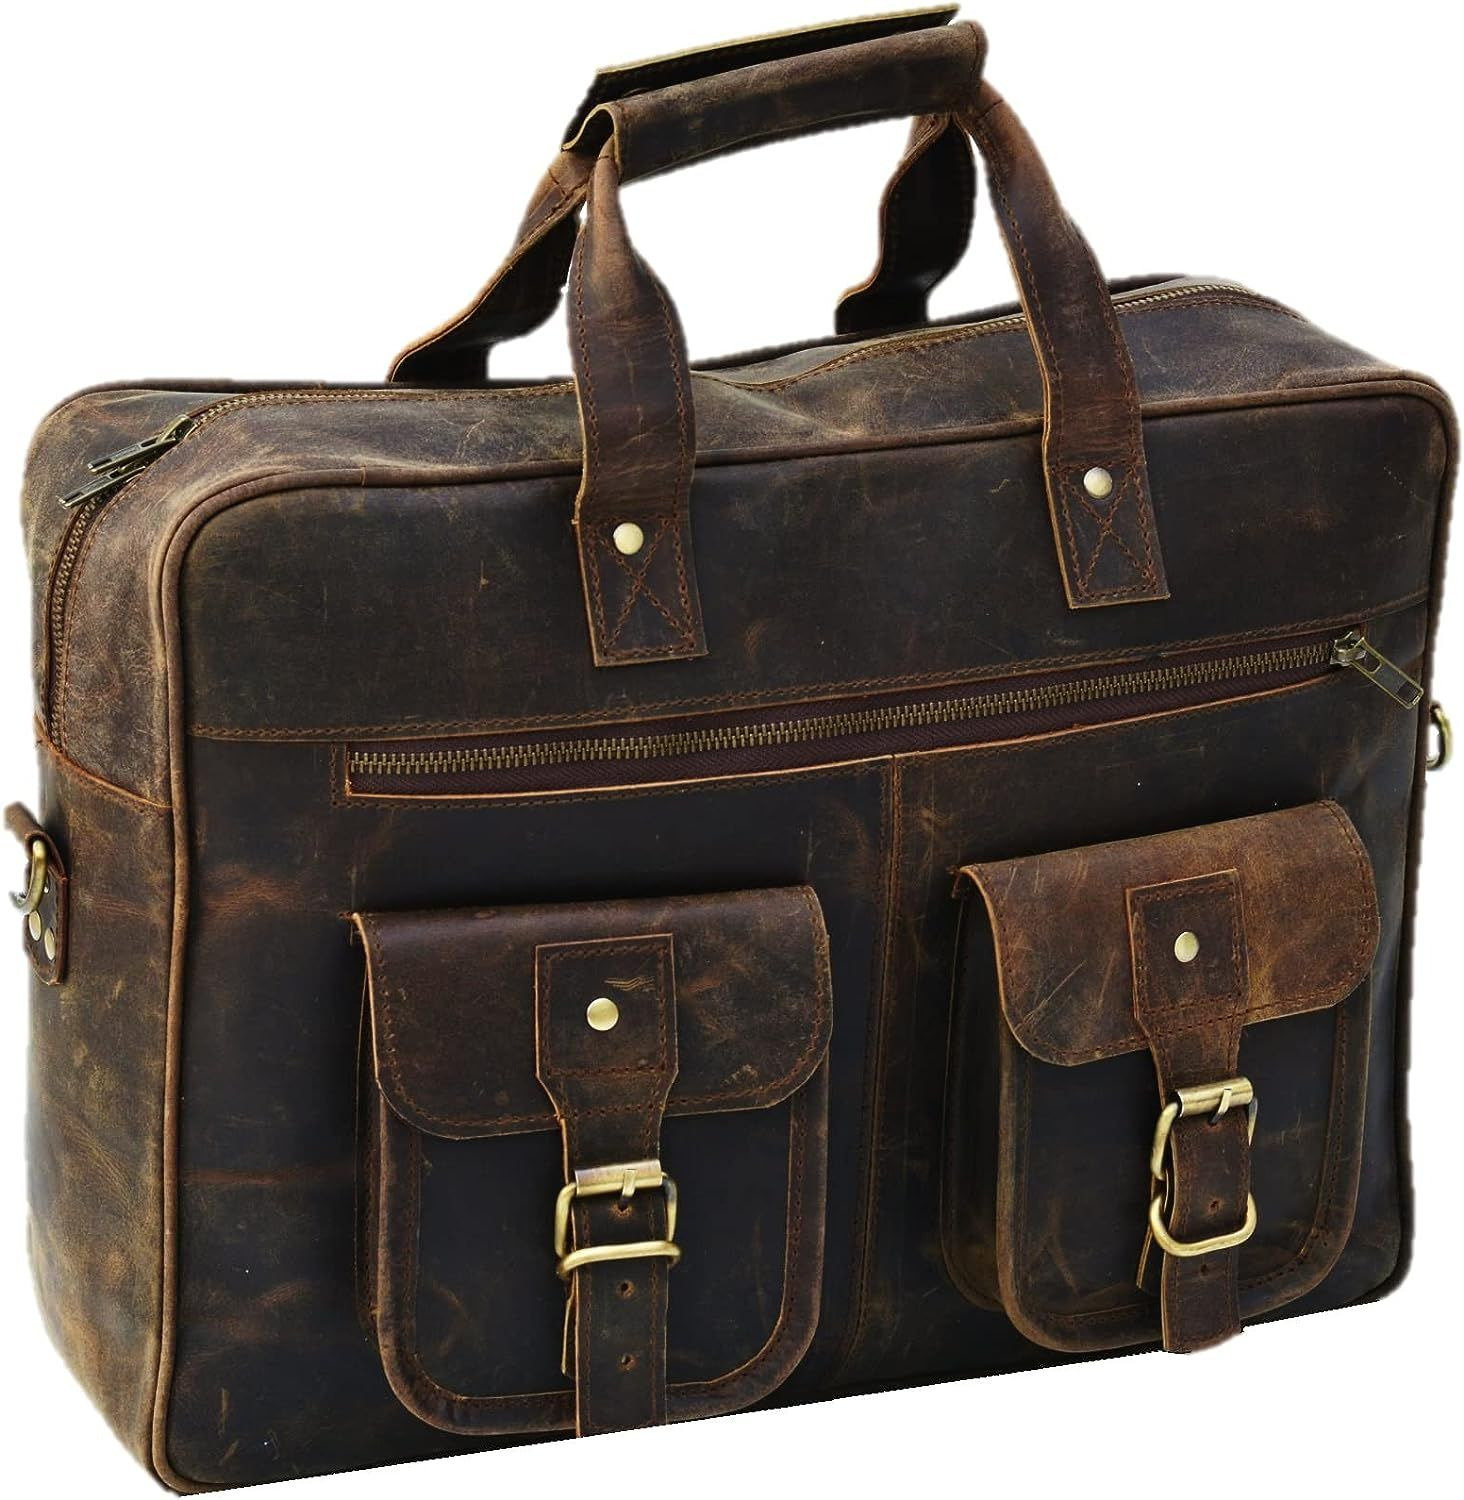 URBAN DEZIRE 16 inch Leather Messenger Laptop Brown Bag for Men Satchel 